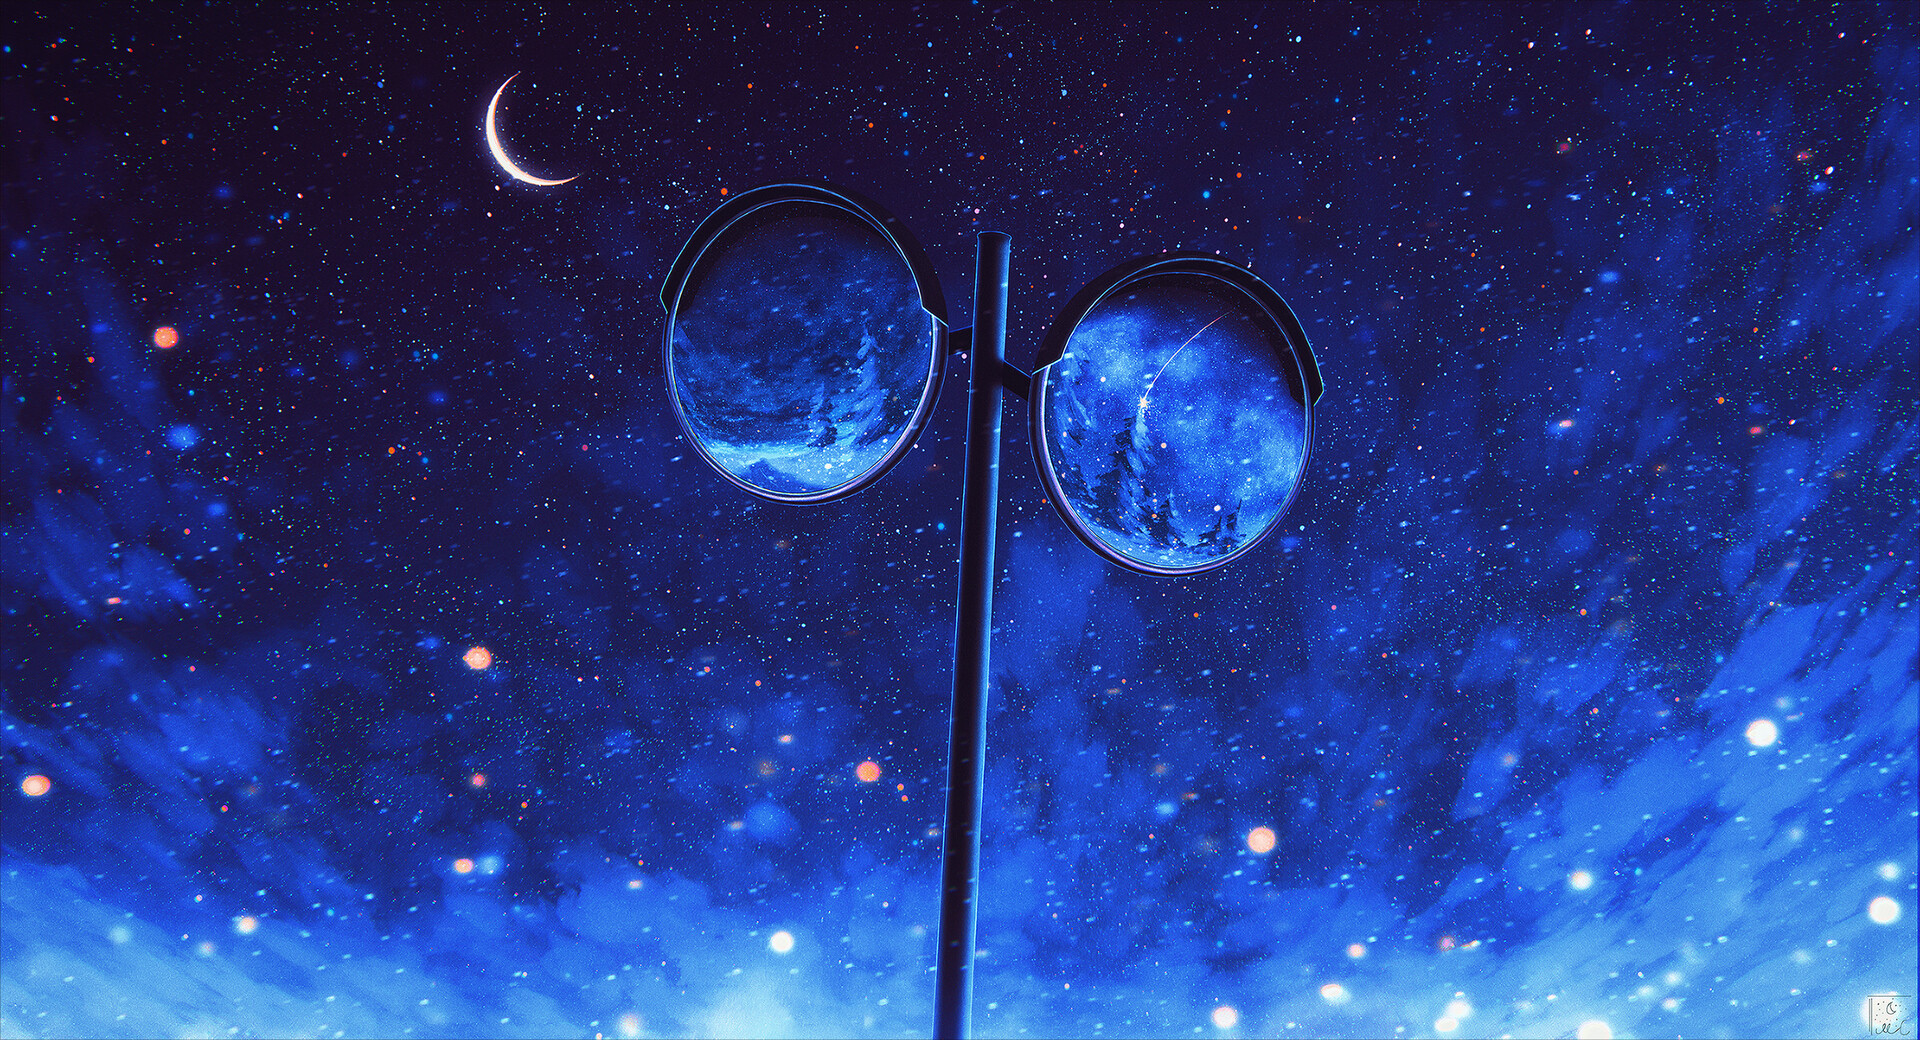 Elizabeth Miloecute Digital Art Starry Night Moon Crescent Moon Reflection Mirror 1920x1040